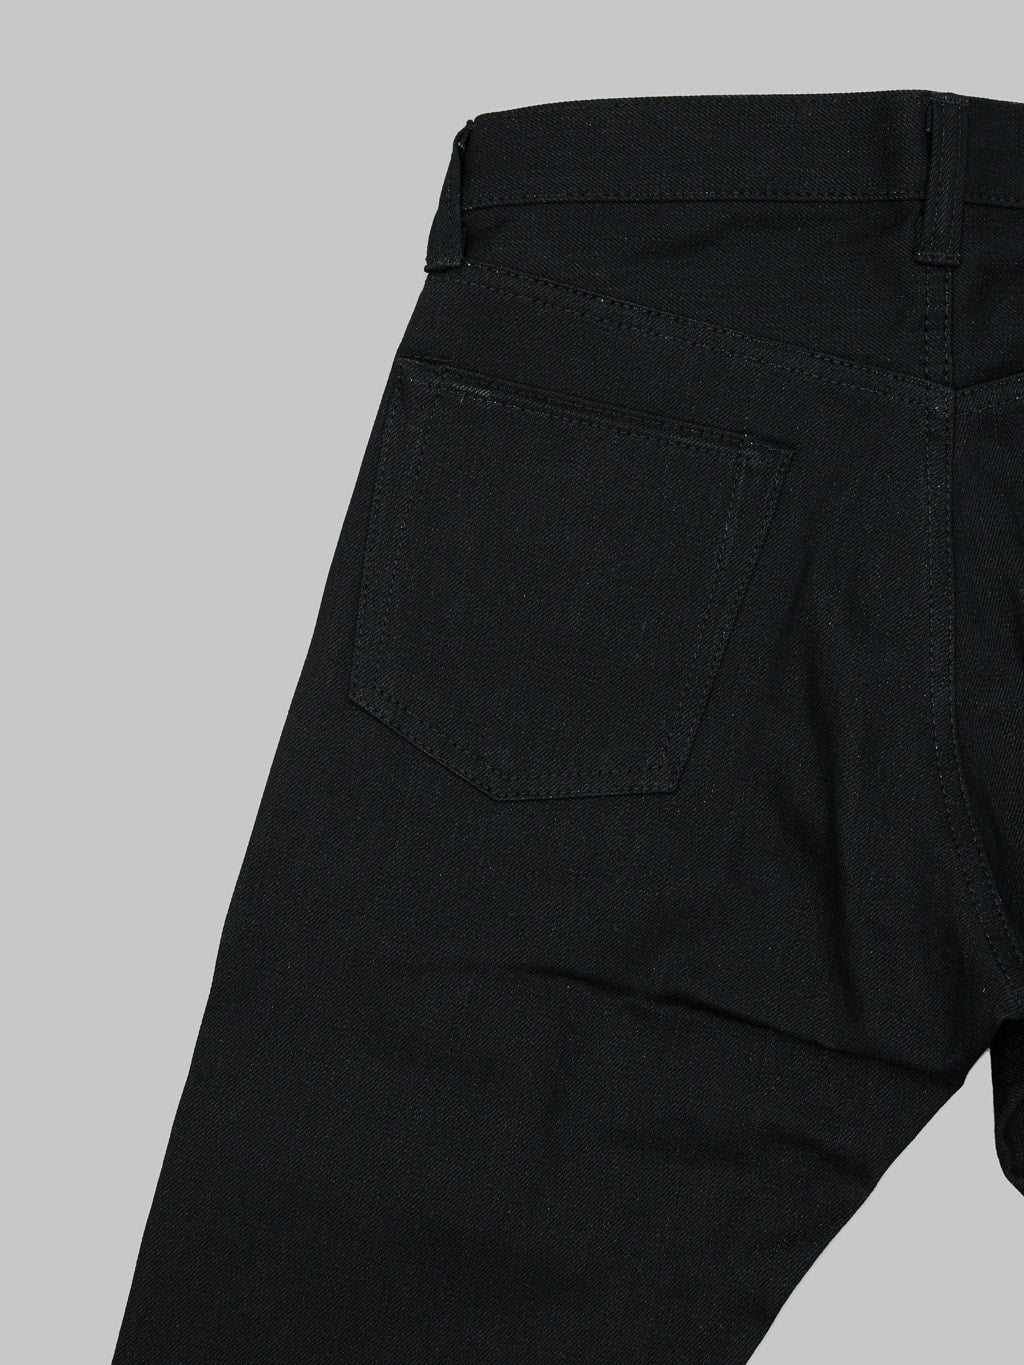 Momotaro 0306B Black x Black Tight Tapered Jeans pocket closeup